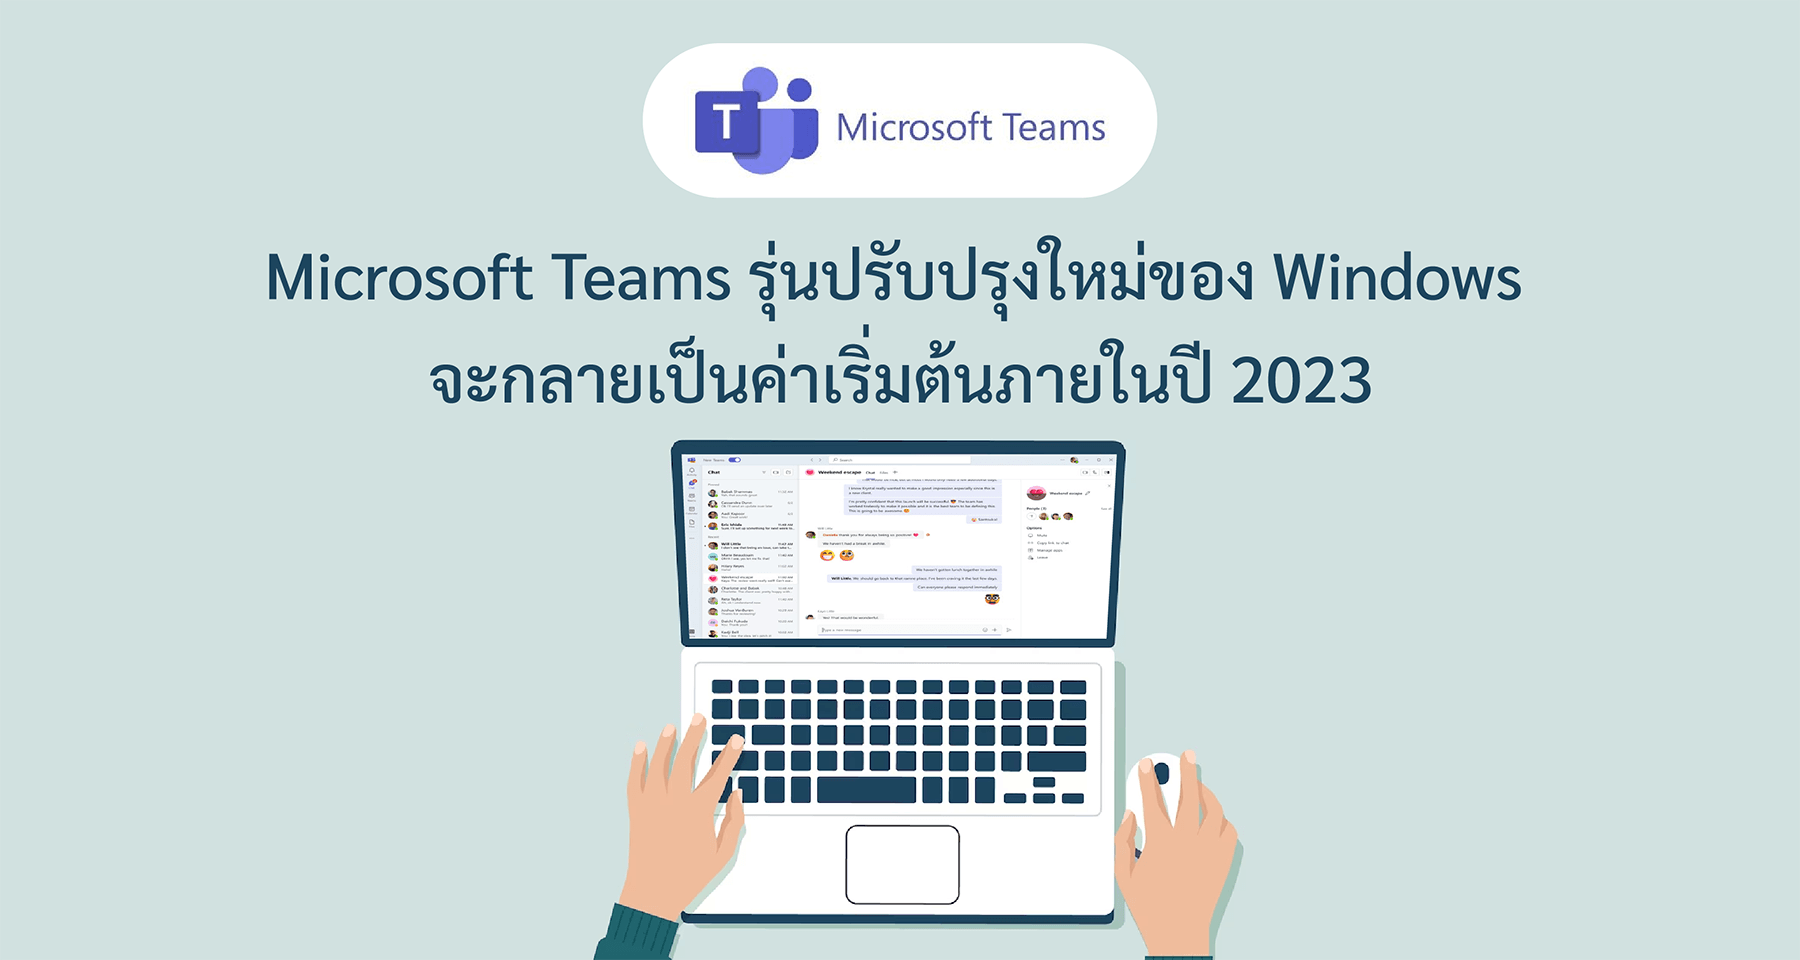 Microsoft Teams รุ่นปรับปรุงใหม่ของ Windows จะกลายเป็นค่าเริ่มต้นภายในปี 2023